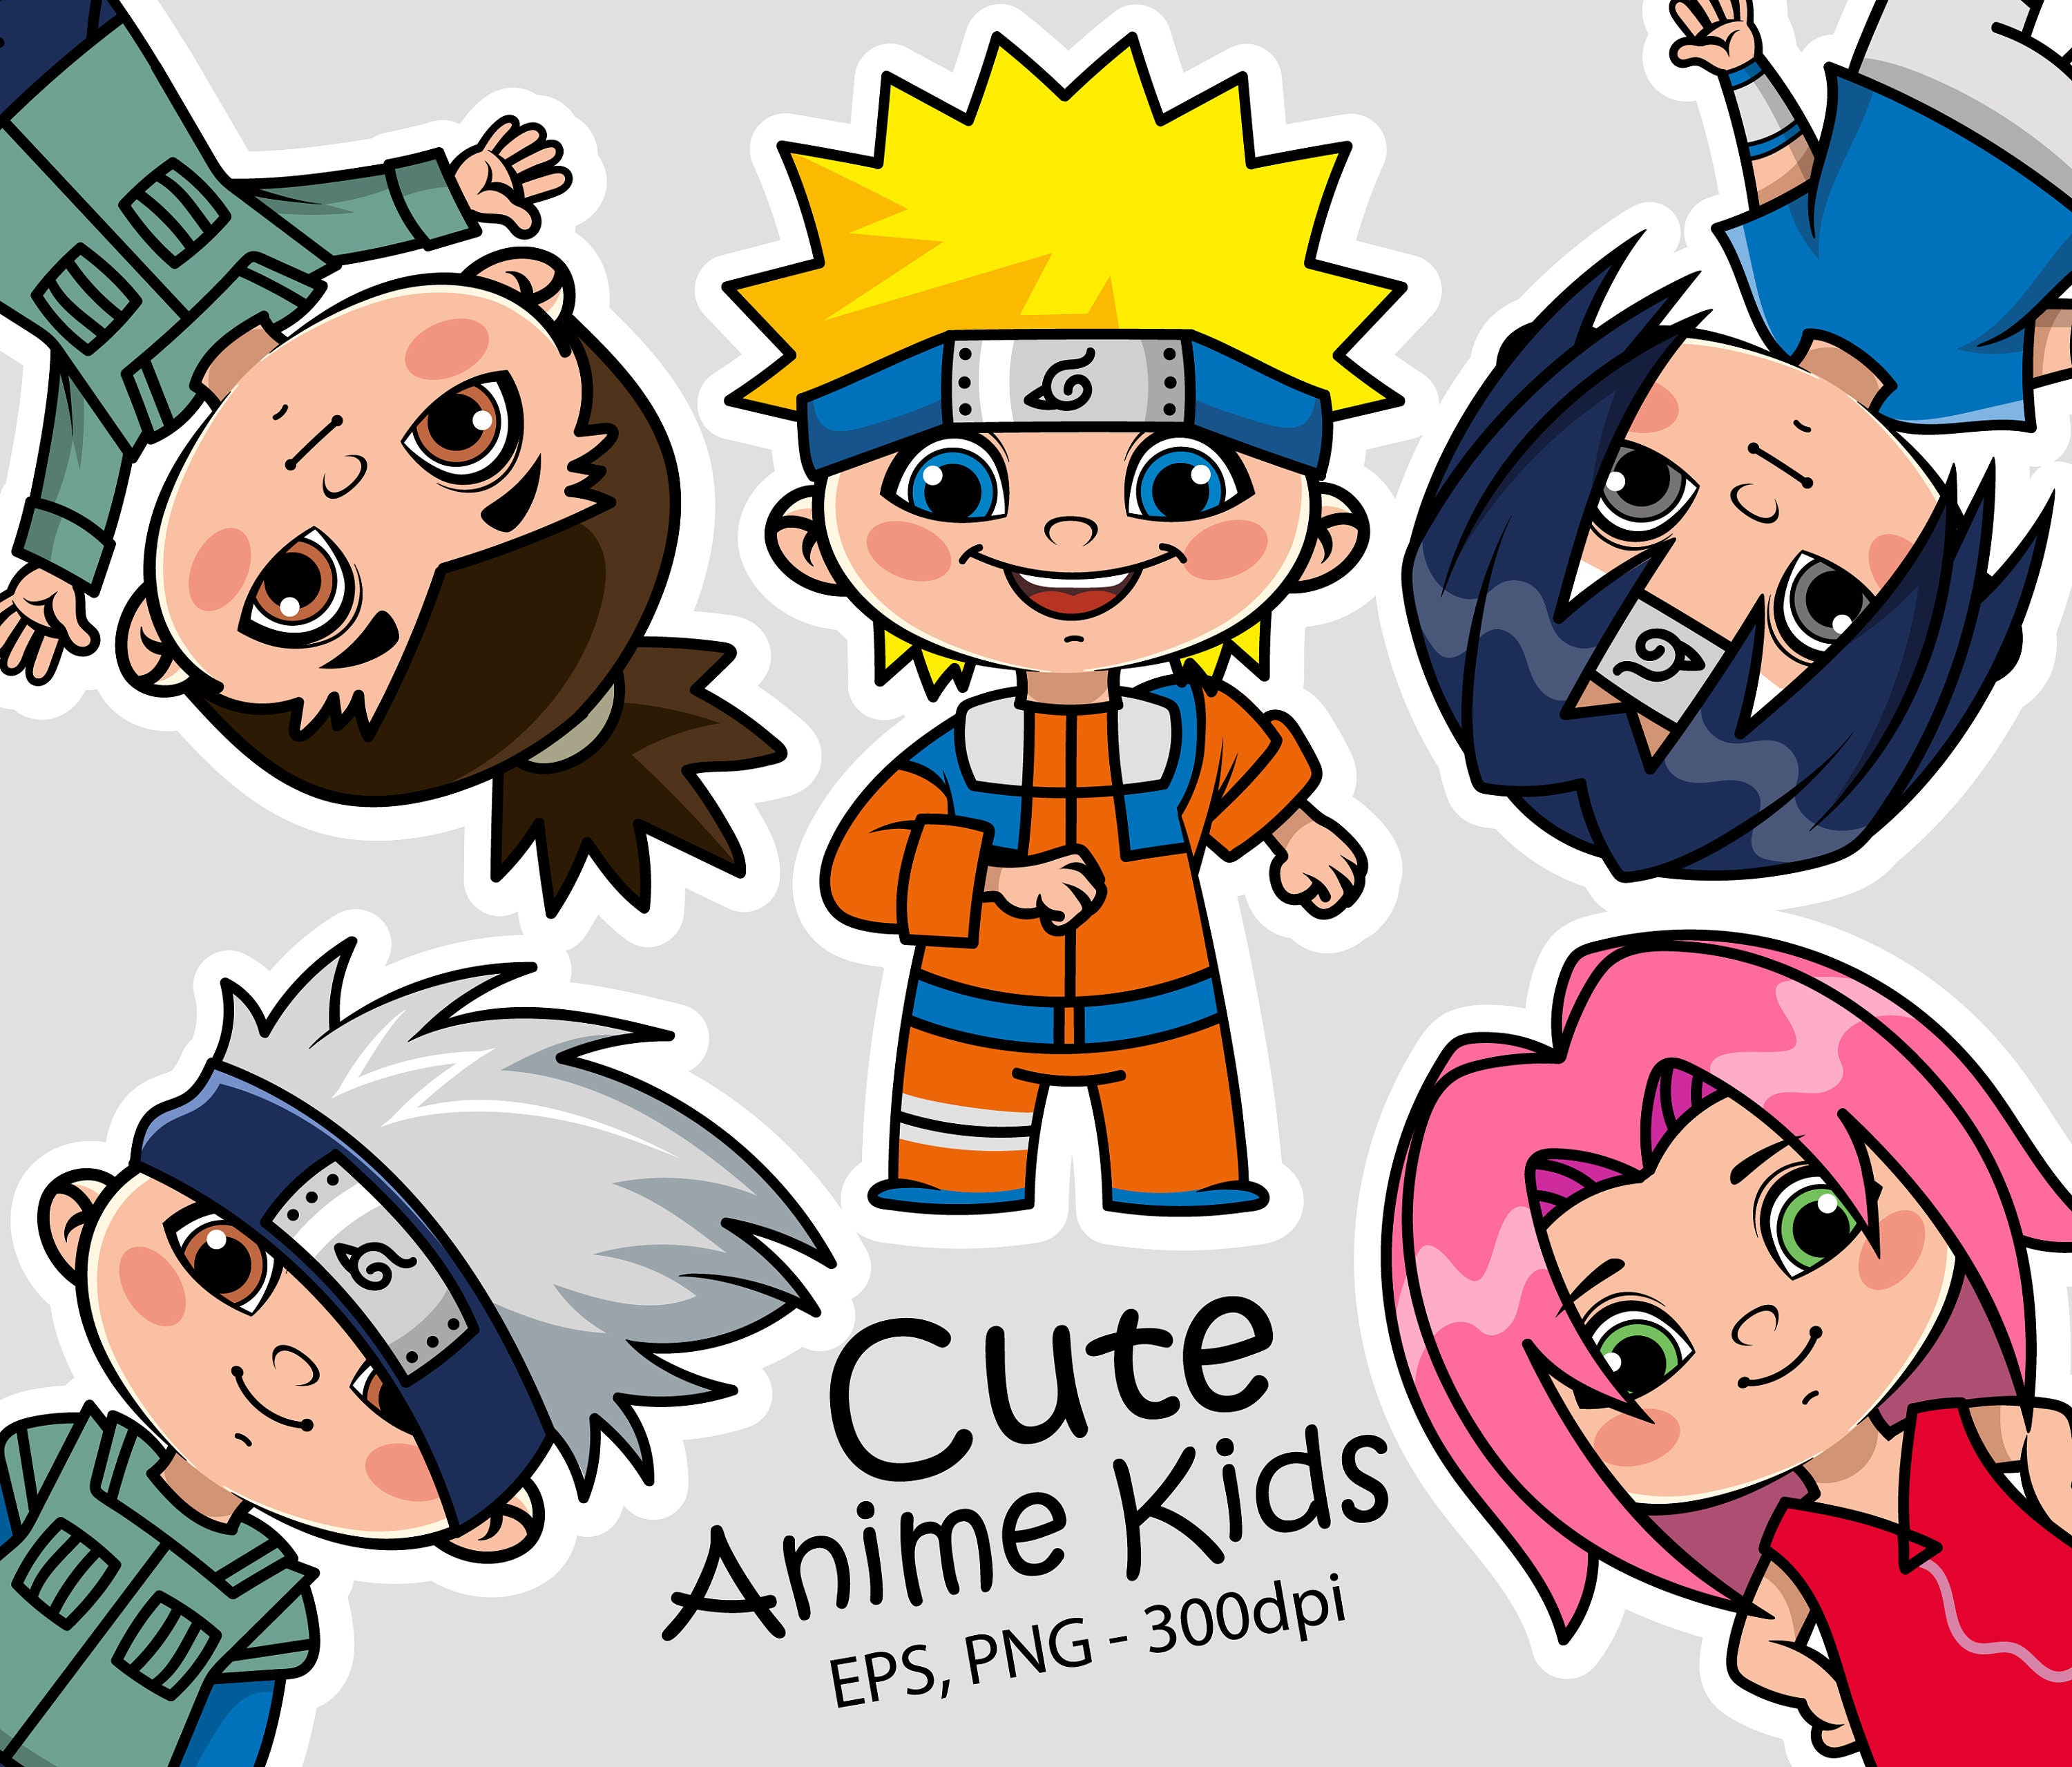 Naruto Uzumaki Anime Stickers Wholesale sticker supplier 